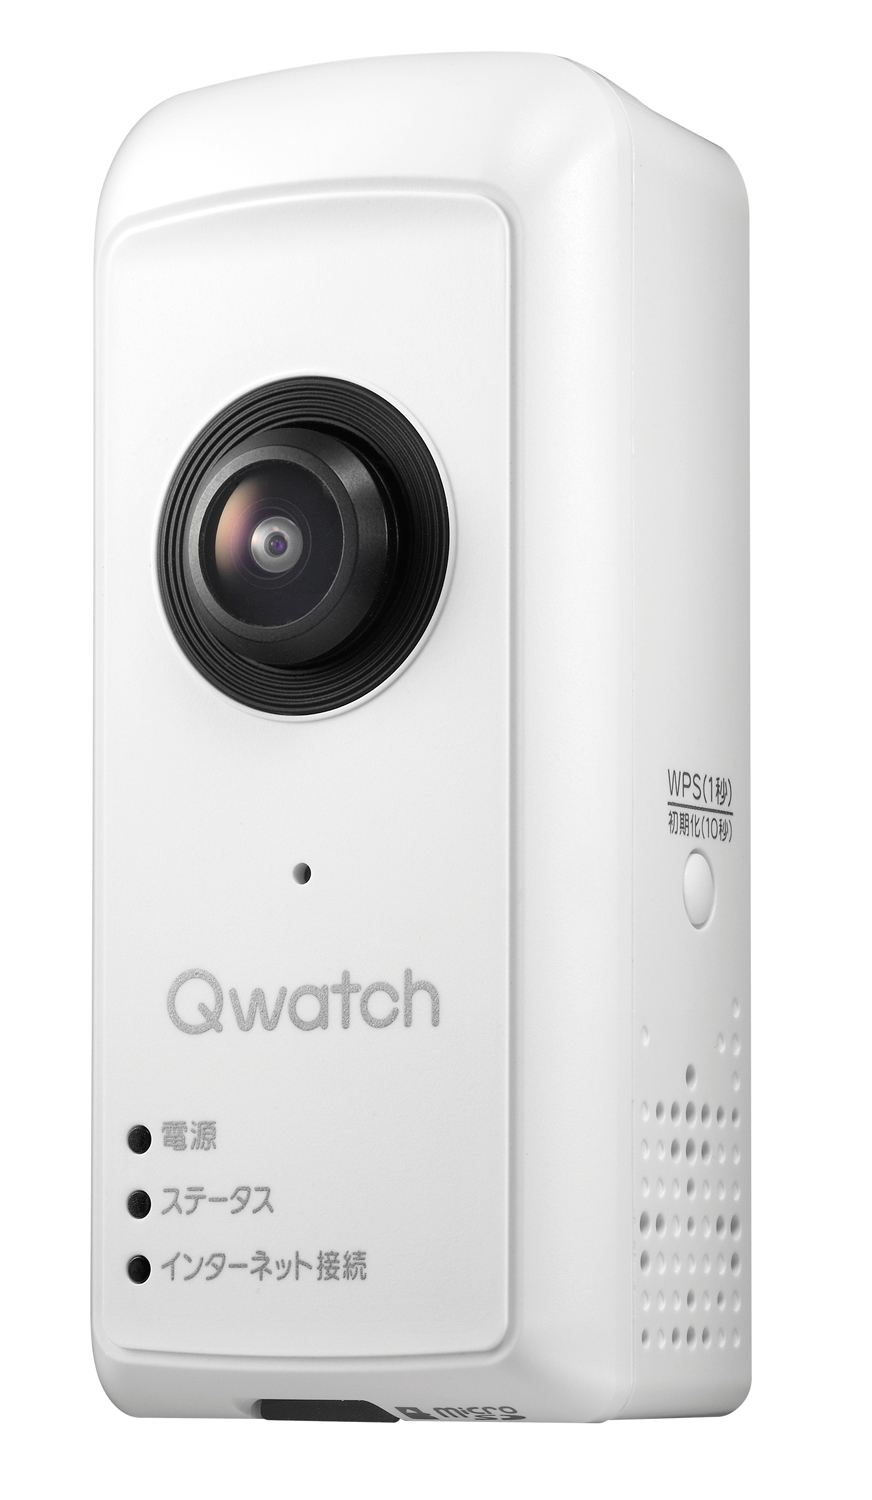 IO-DATA Qwatch TS-WRFE ネットワークカメラ